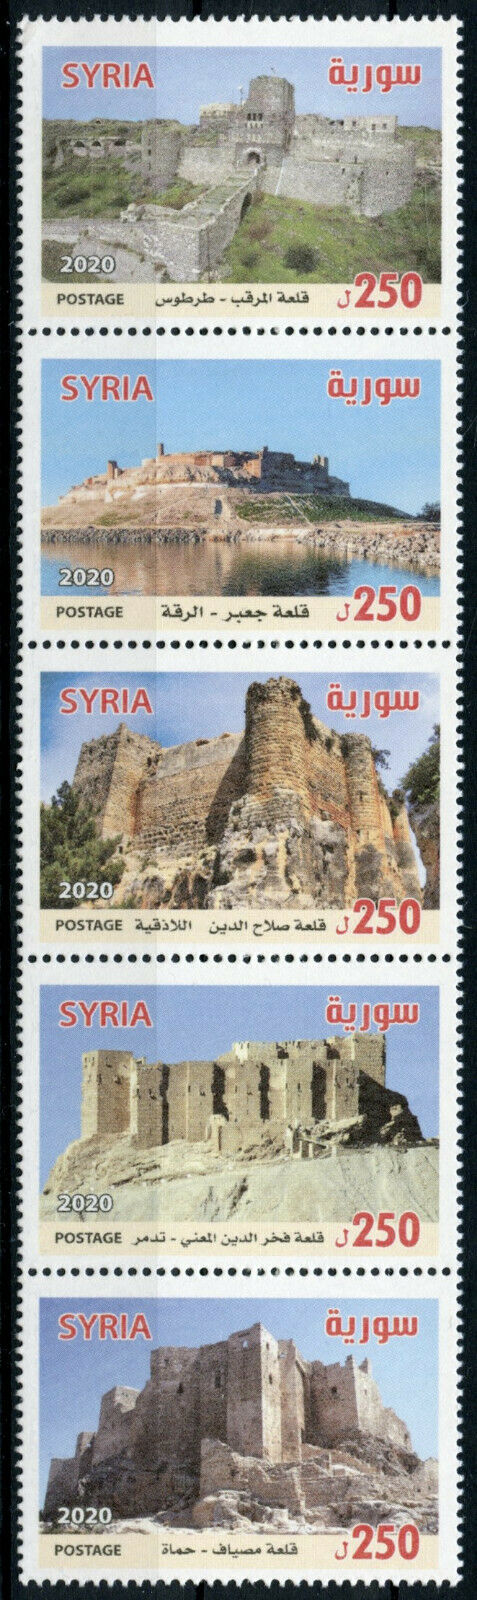 Syria Architecture Stamps 2020 MNH Historic Fortresses Landscapes 5v Strip